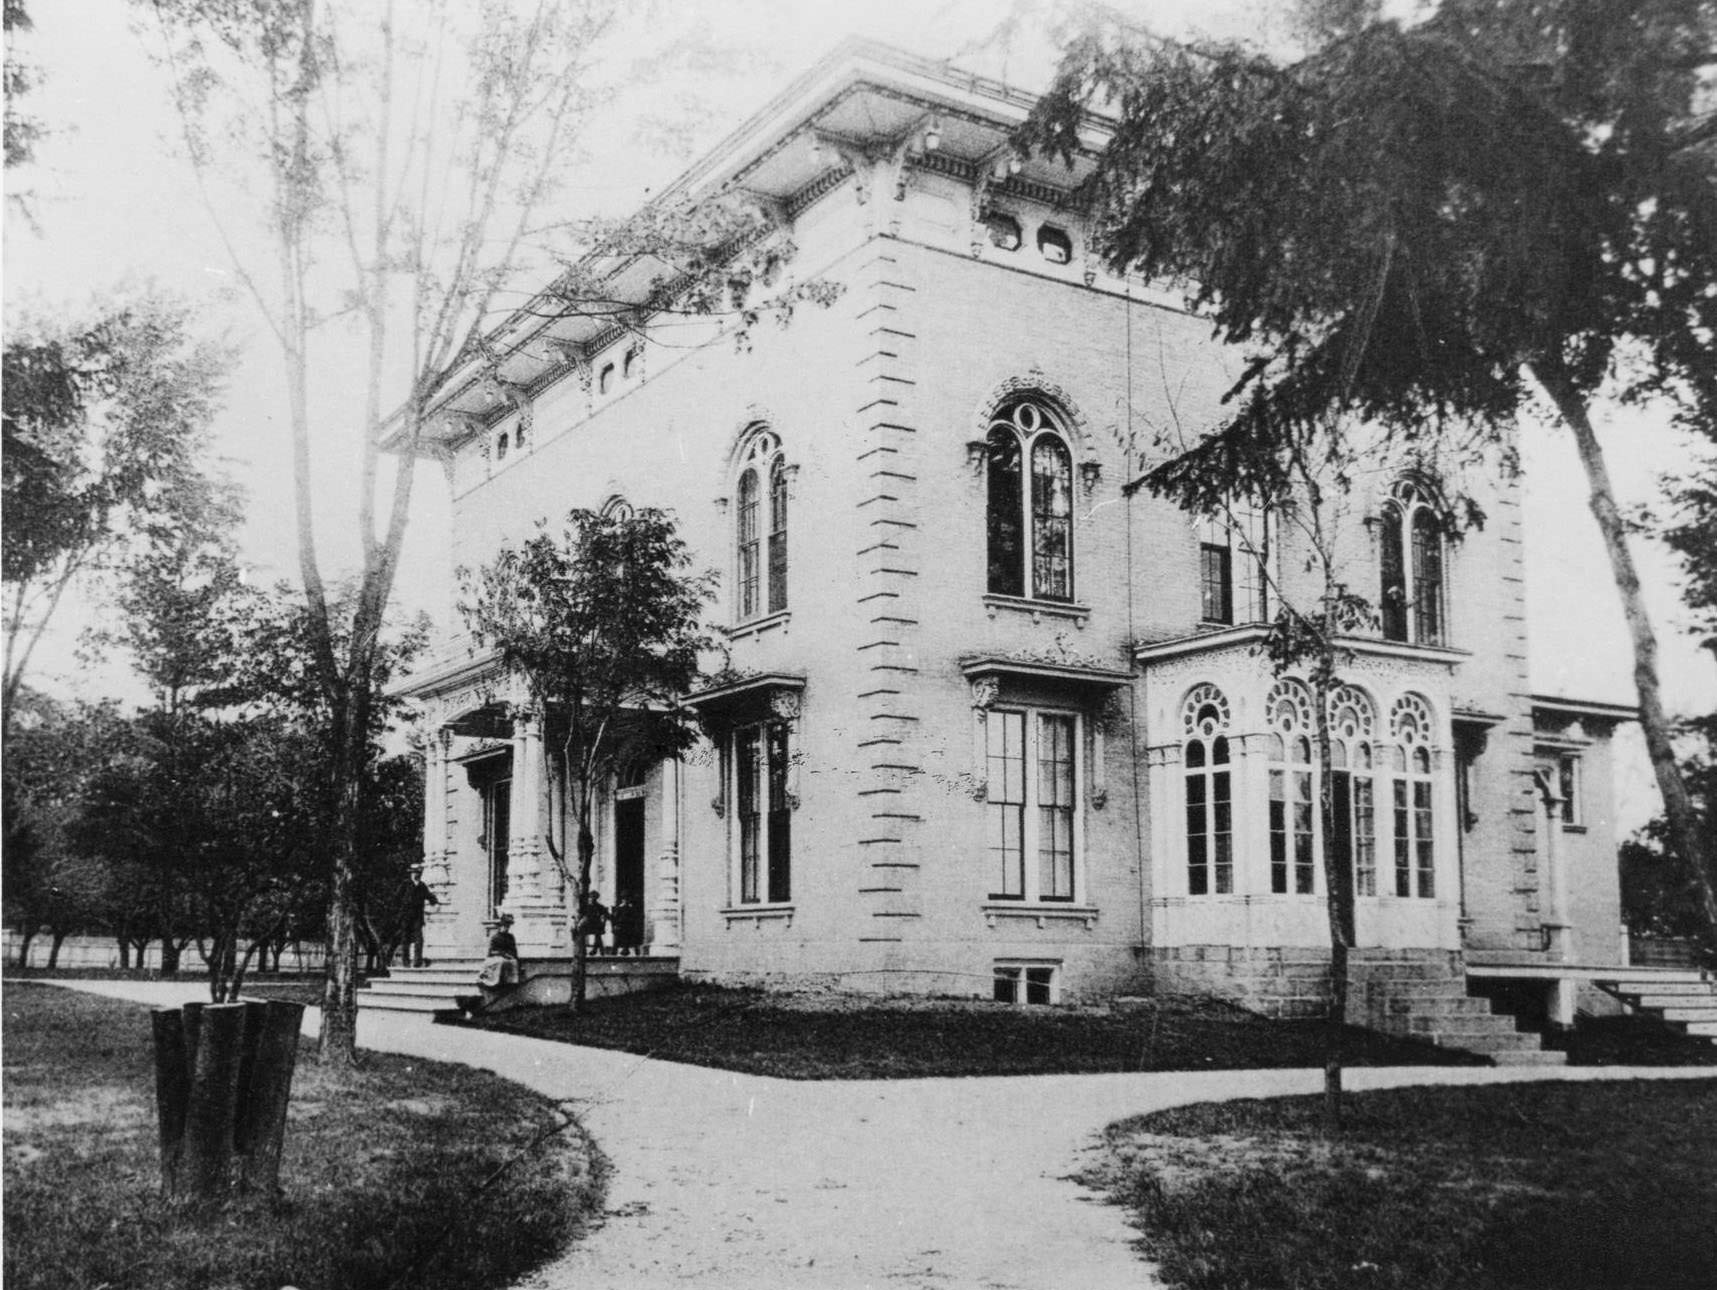 William Henry Tallman House at 440 South Jackson Street in Janesville, 1888.